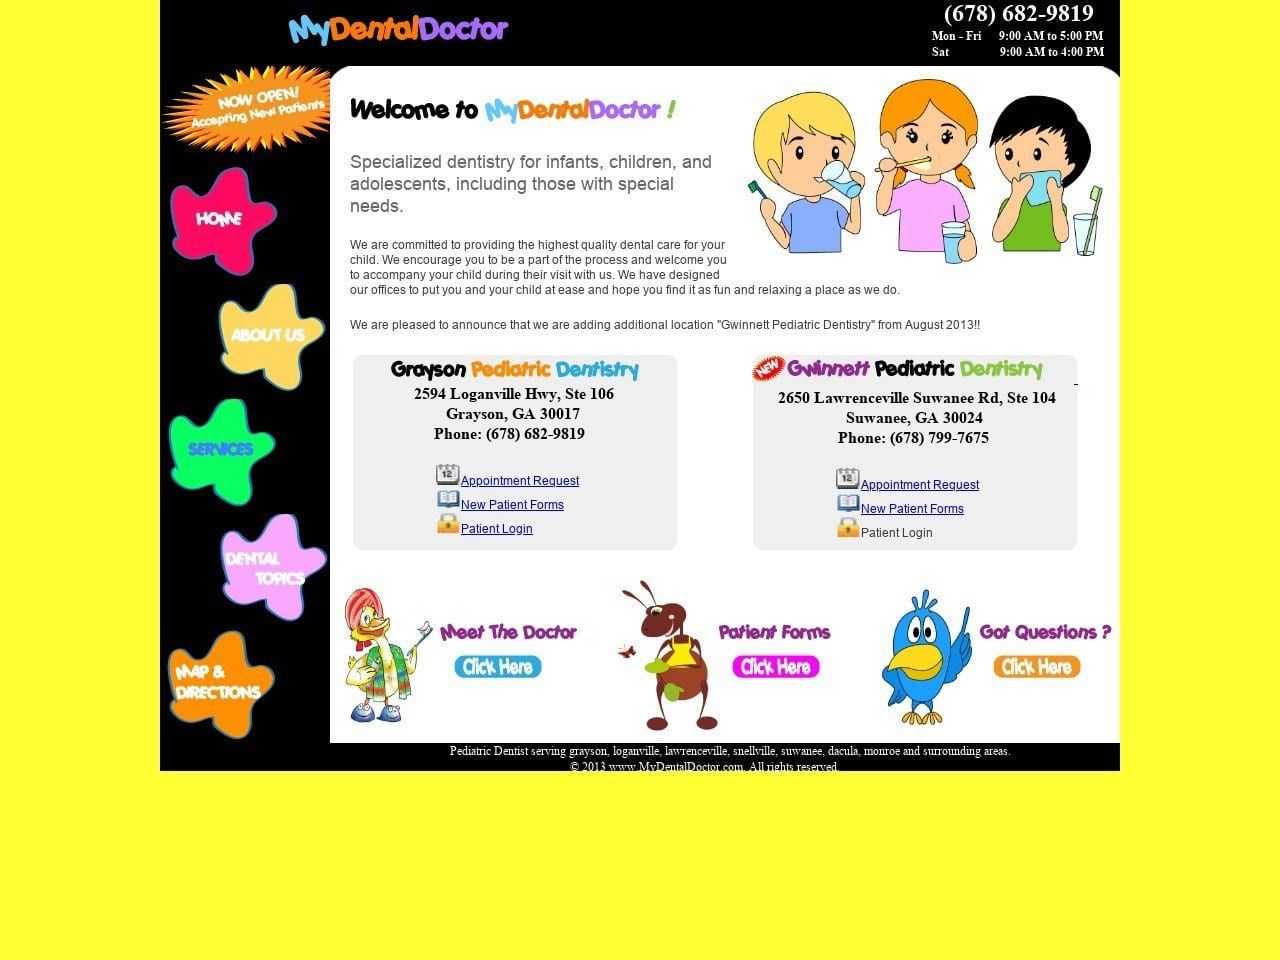 Grayson Pediatric Dentist Website Screenshot from mydentaldoctor.com